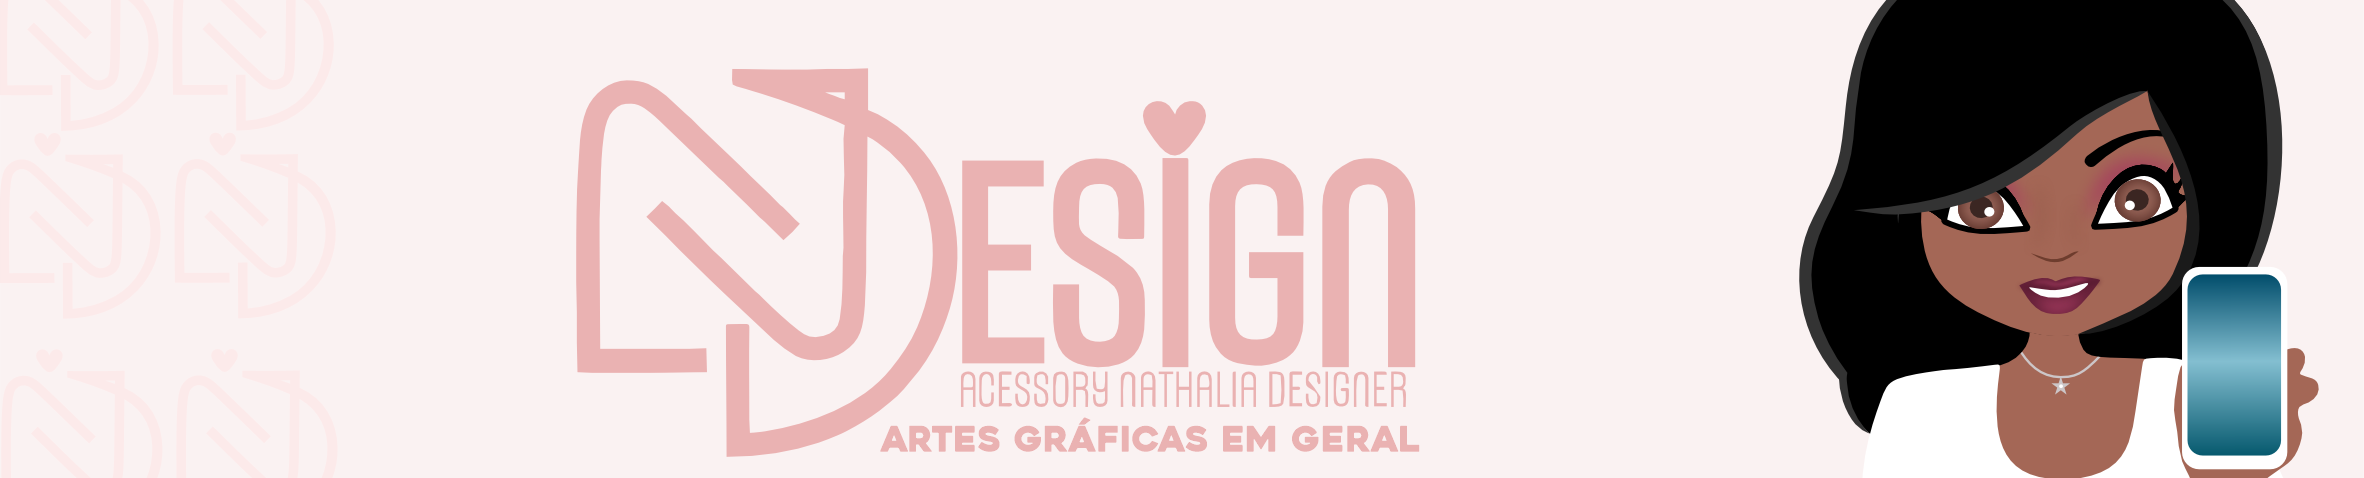 Acessory Nathalia Designer's profile banner